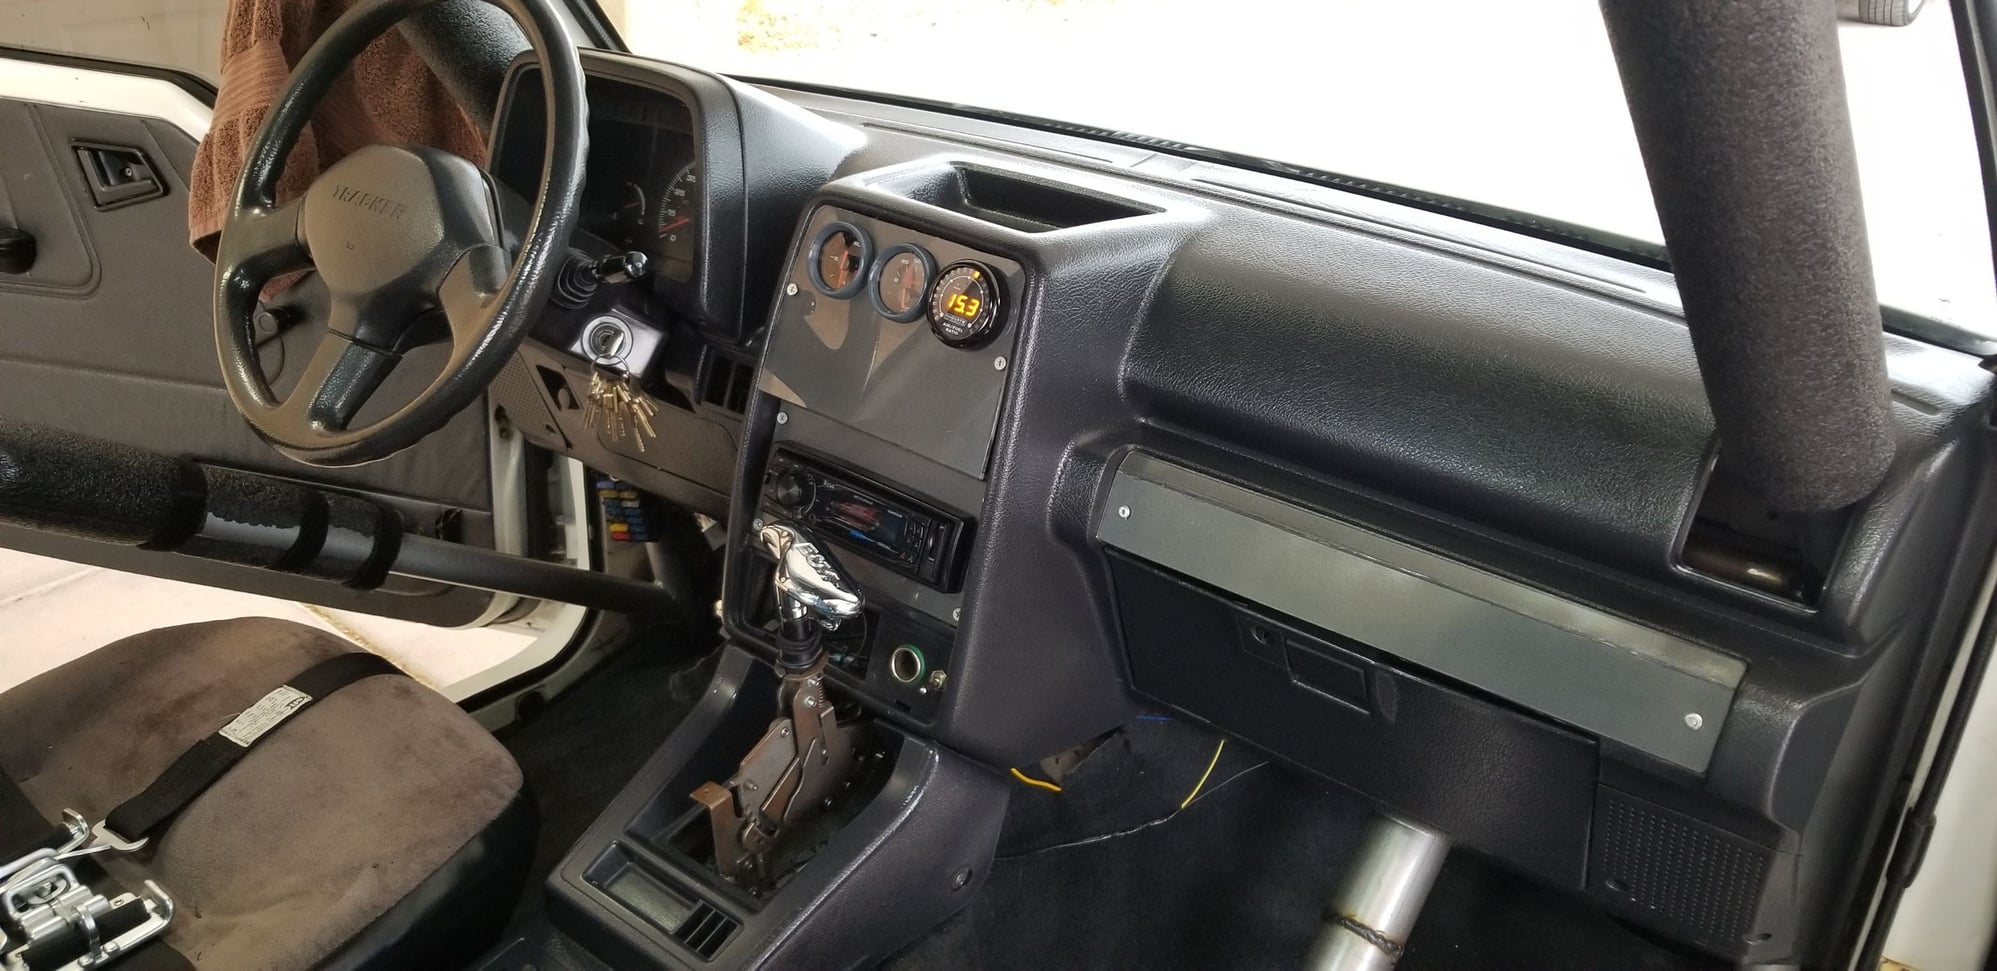 1993 Geo Tracker - LS/Turbo 1993 Geo Tracker. Runs 9's, does wheelies. - Used - VIN 2CNBE18U7P6914136 - 200,000 Miles - 8 cyl - 2WD - Automatic - SUV - White - Las Vegas, NV 89131, United States